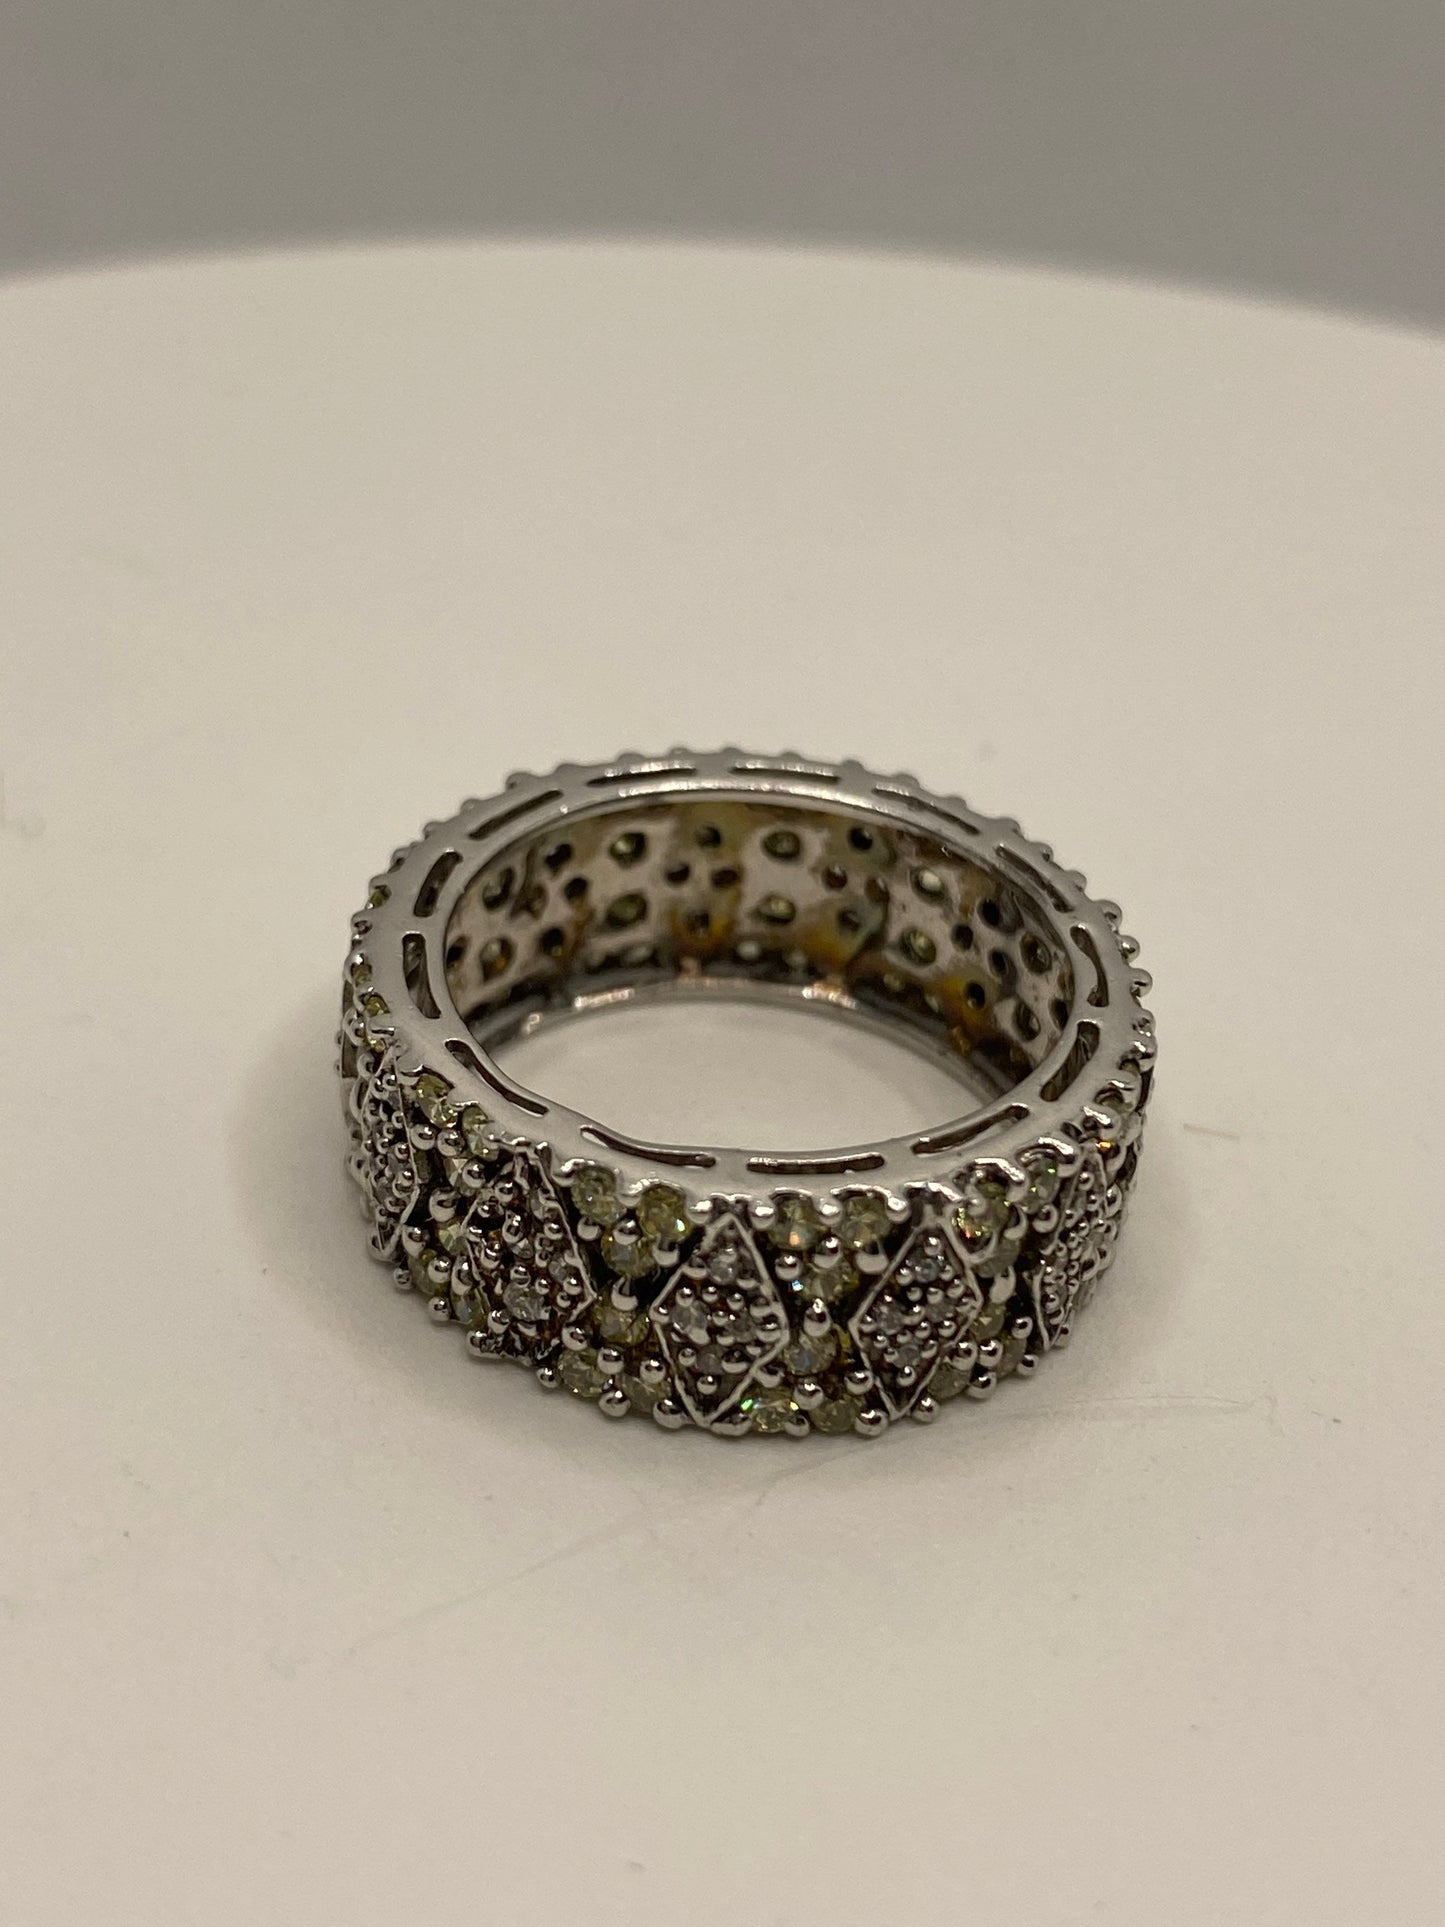 Vintage White Sapphire and Lemon Quartz 925 Sterling Silver Wedding Band Ring